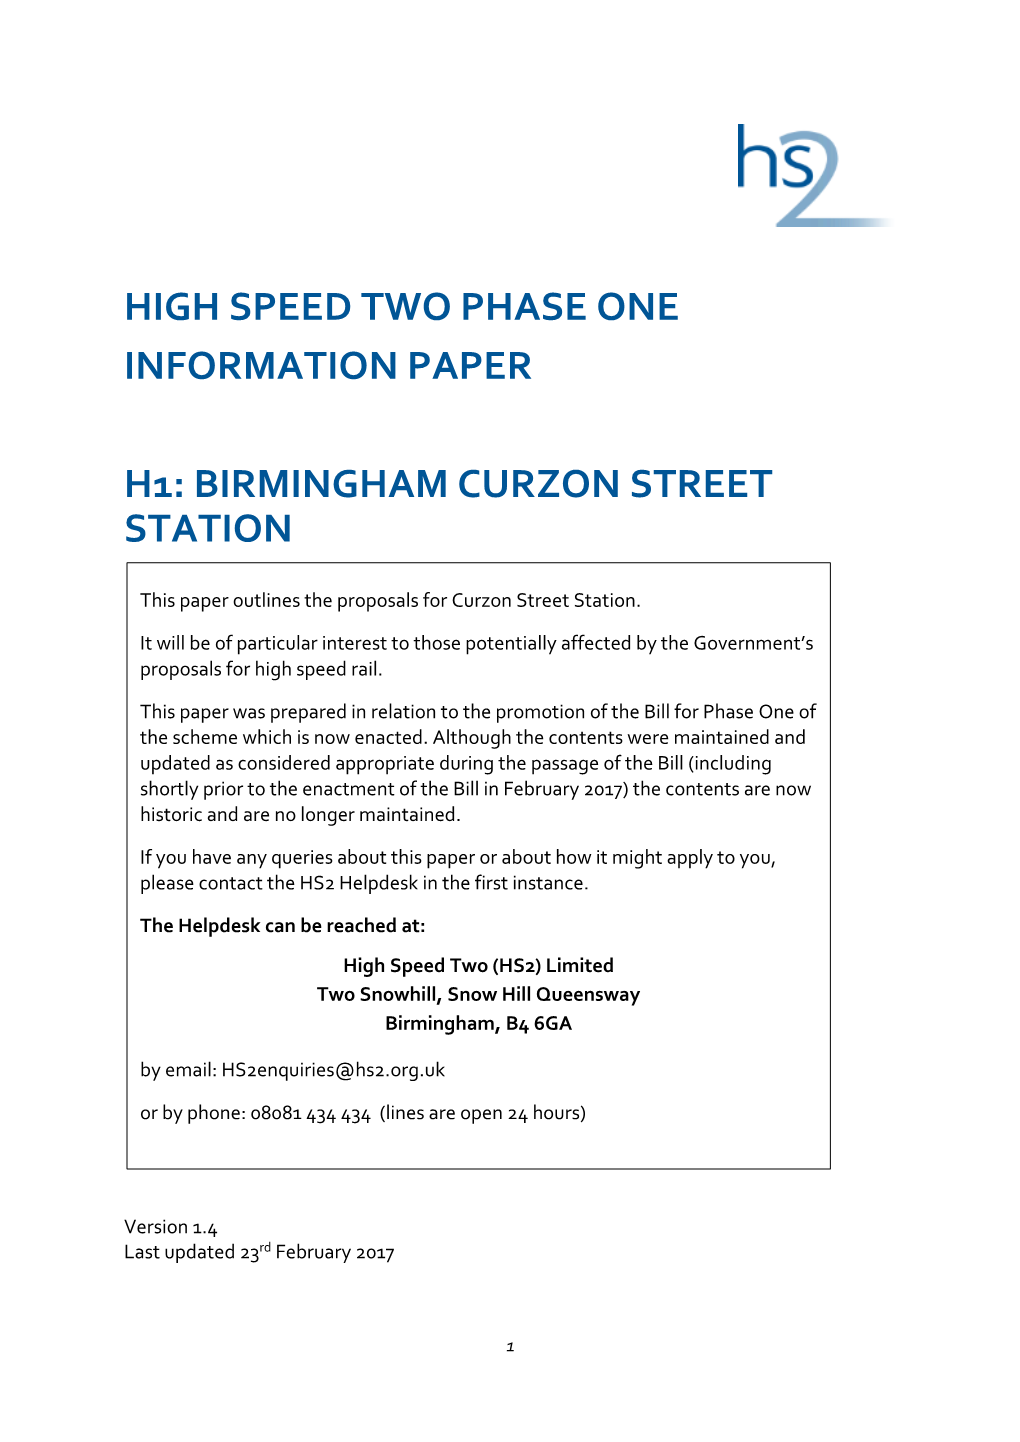 Birmingham Curzon Street Station